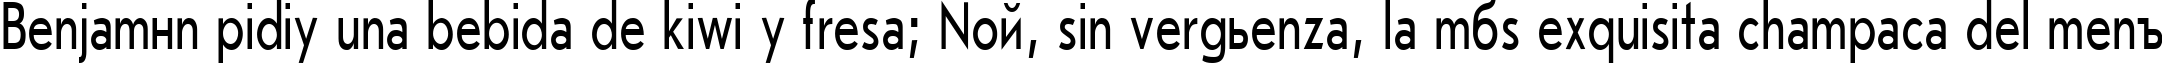 Пример написания шрифтом Journal SansSerif Plain:001.00170H текста на испанском